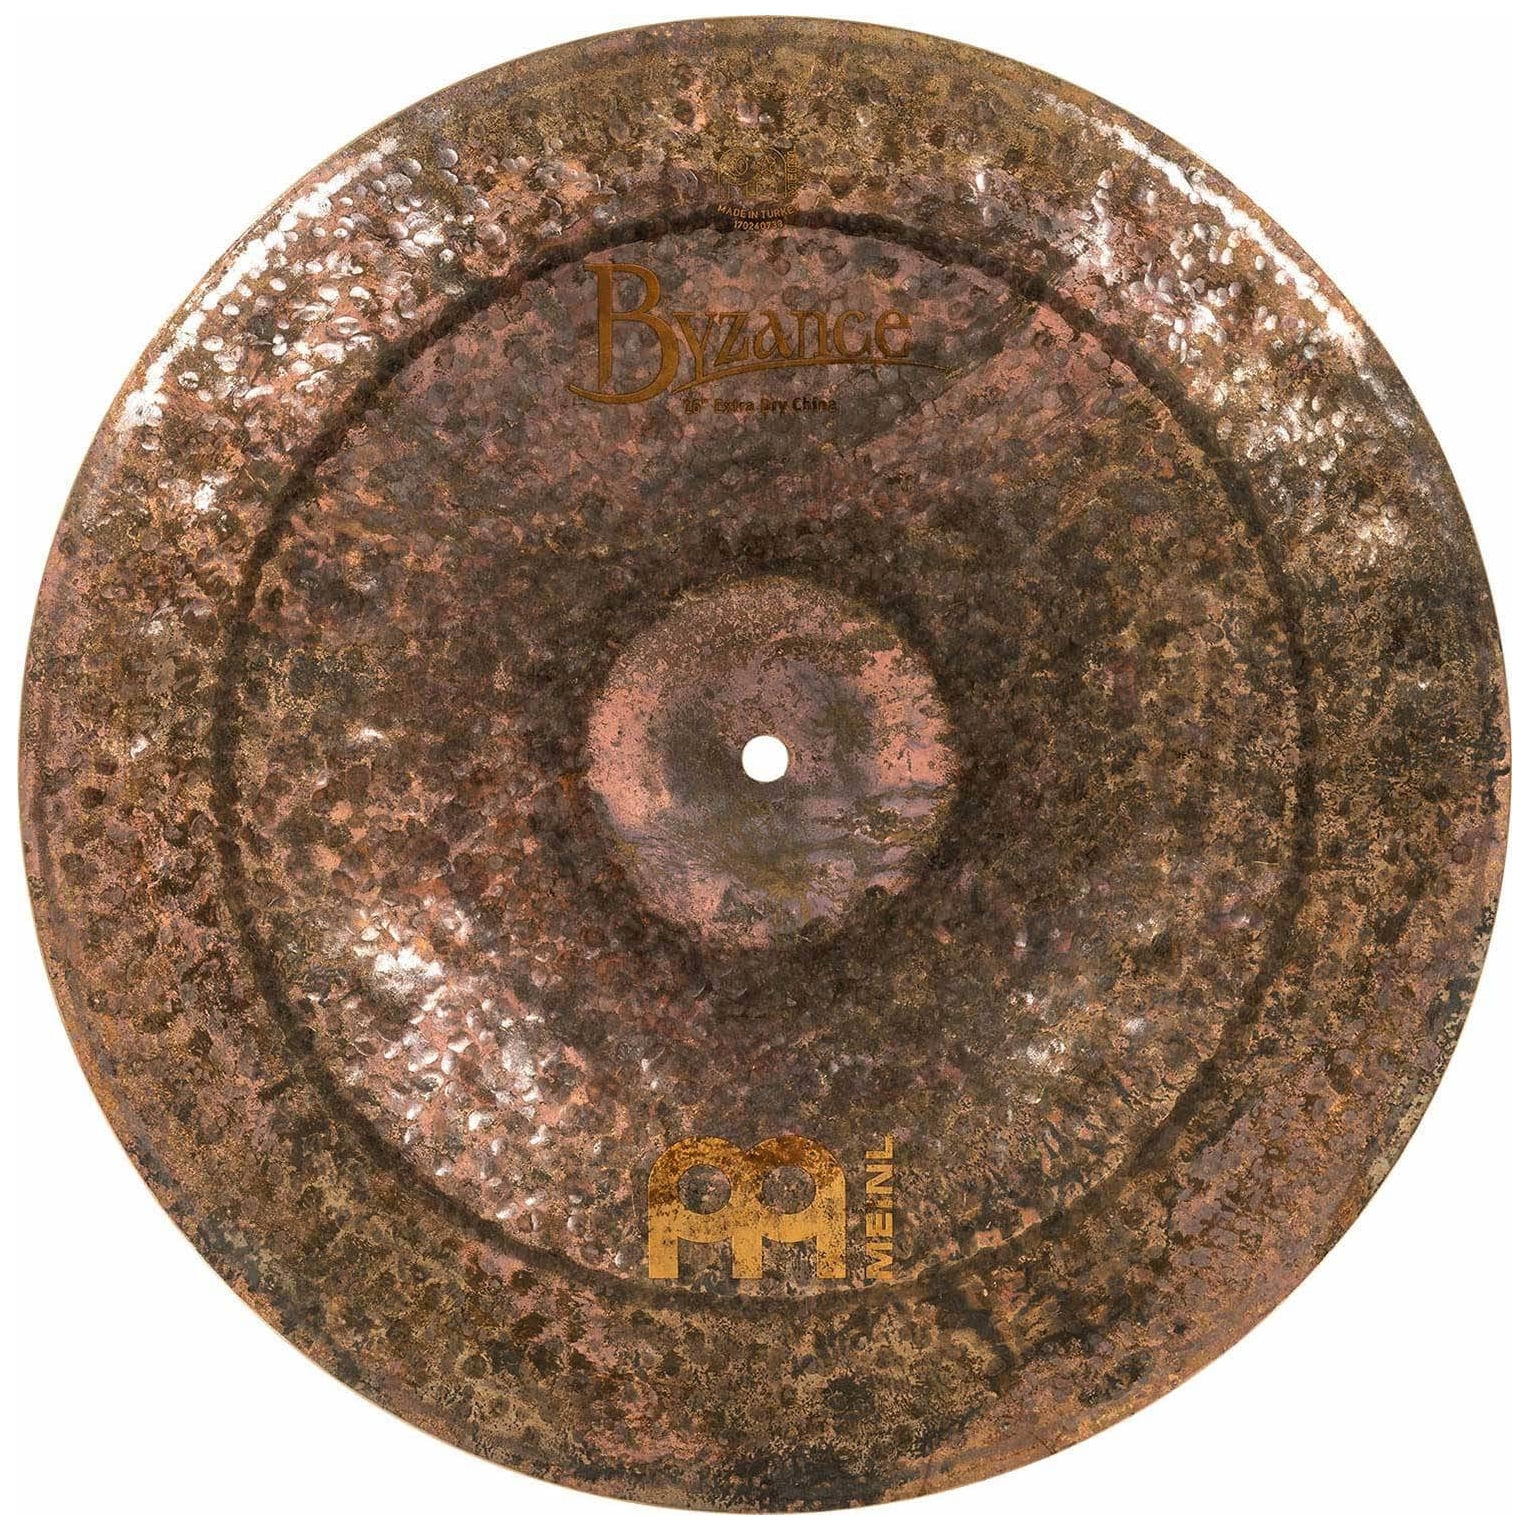 Meinl Cymbals B16EDCH - 16" Byzance Extra Dry China 